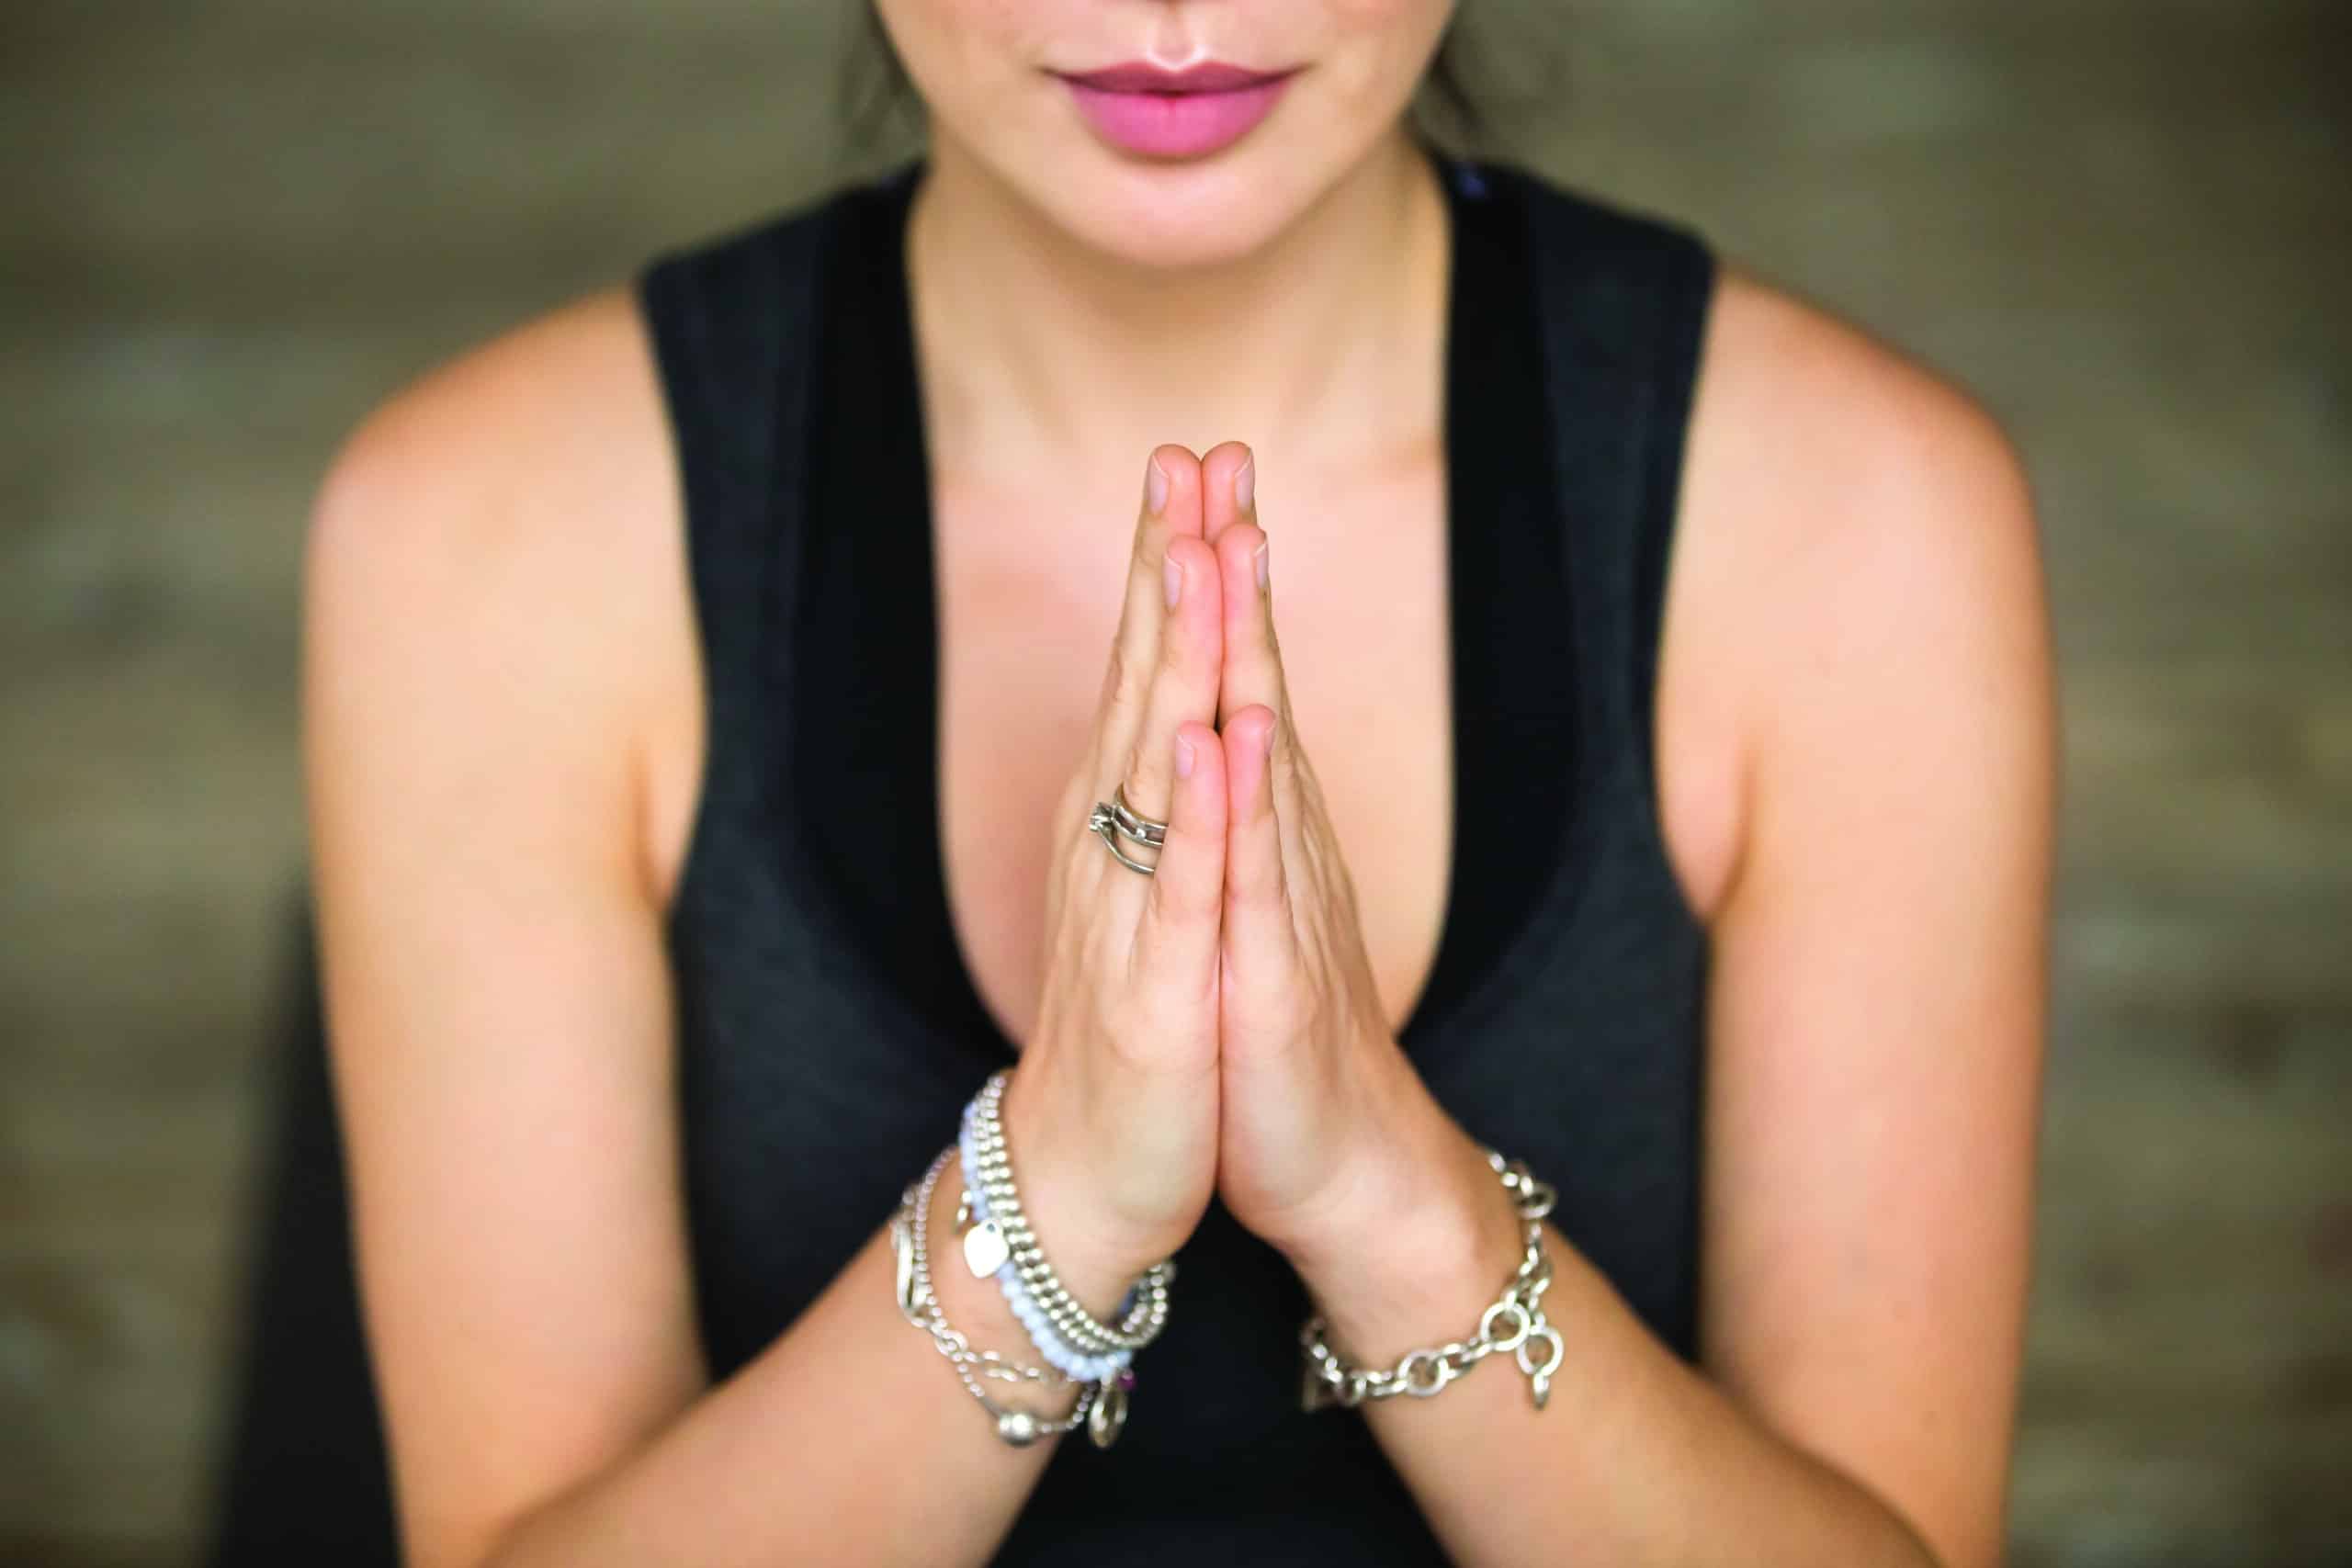 internal family systems - yogi